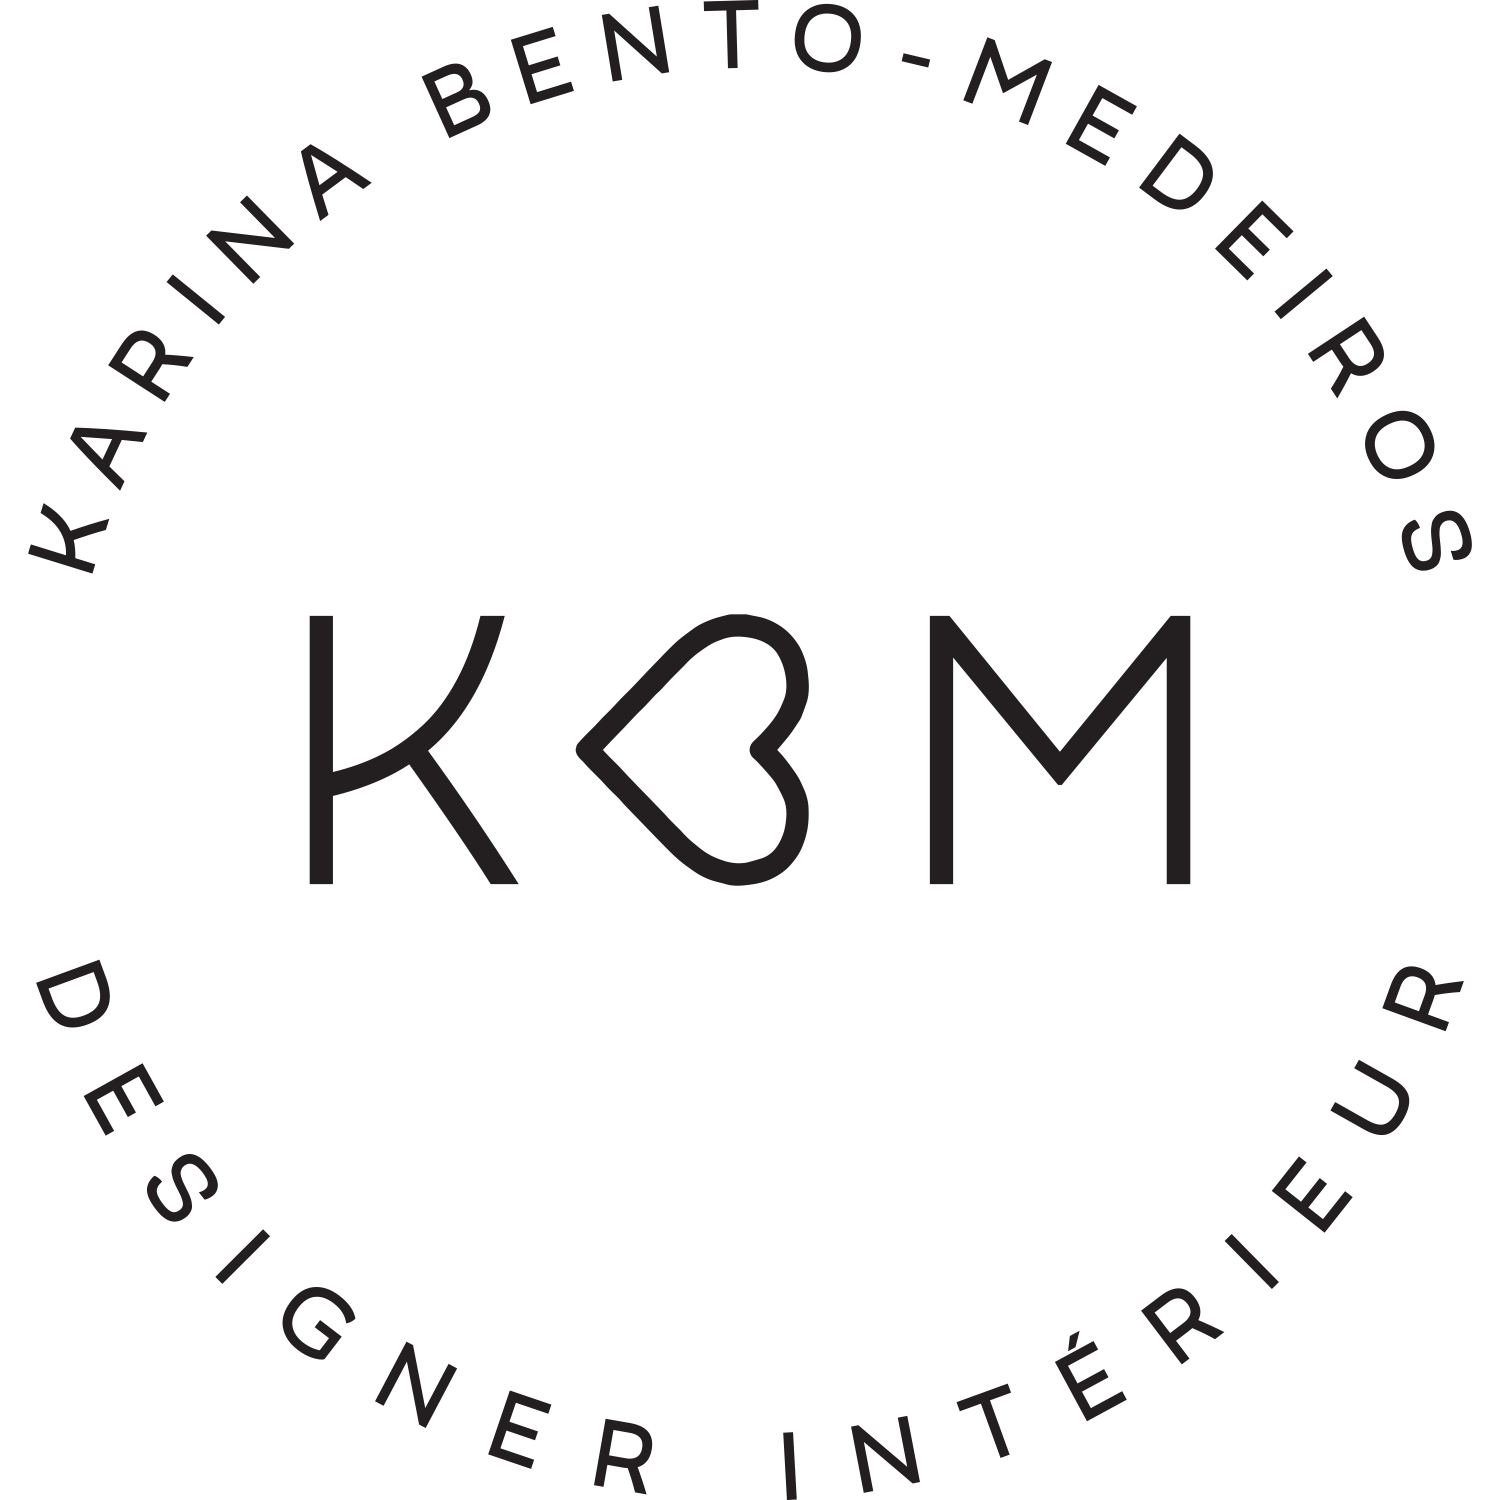 Design KBM